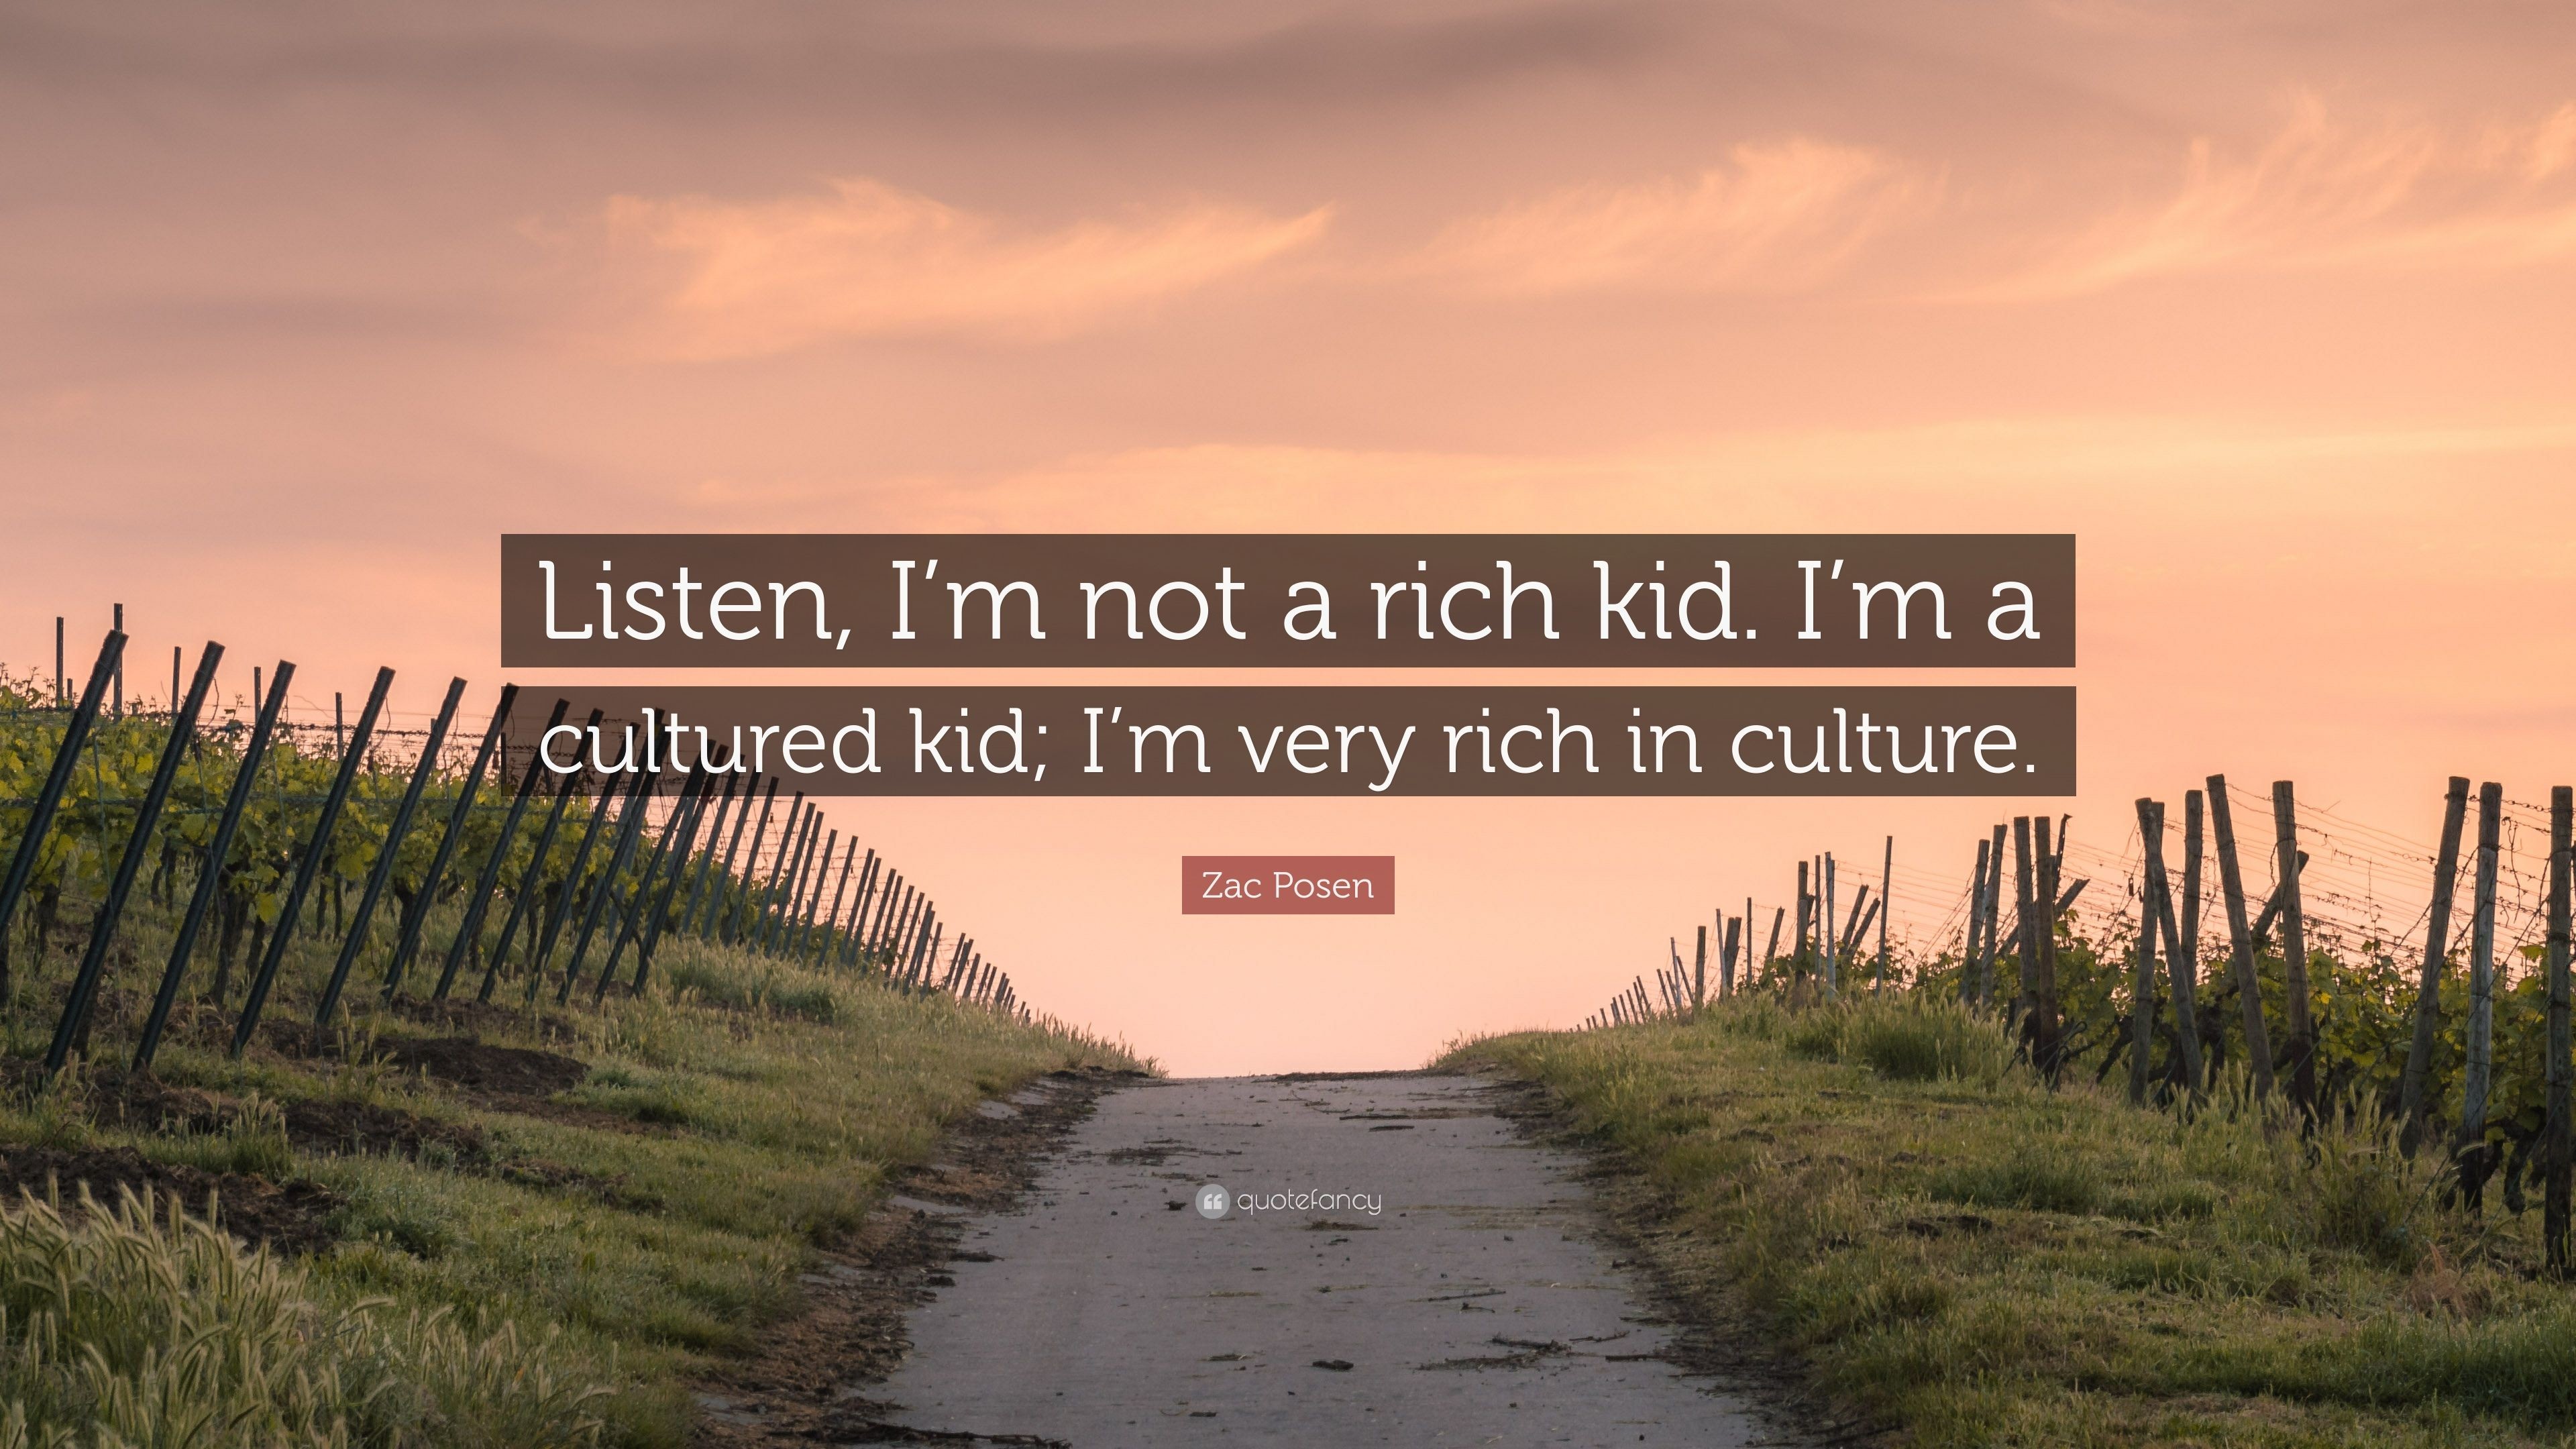 3840x2160 Zac Posen Quote: “Listen, I'm not a rich kid. I